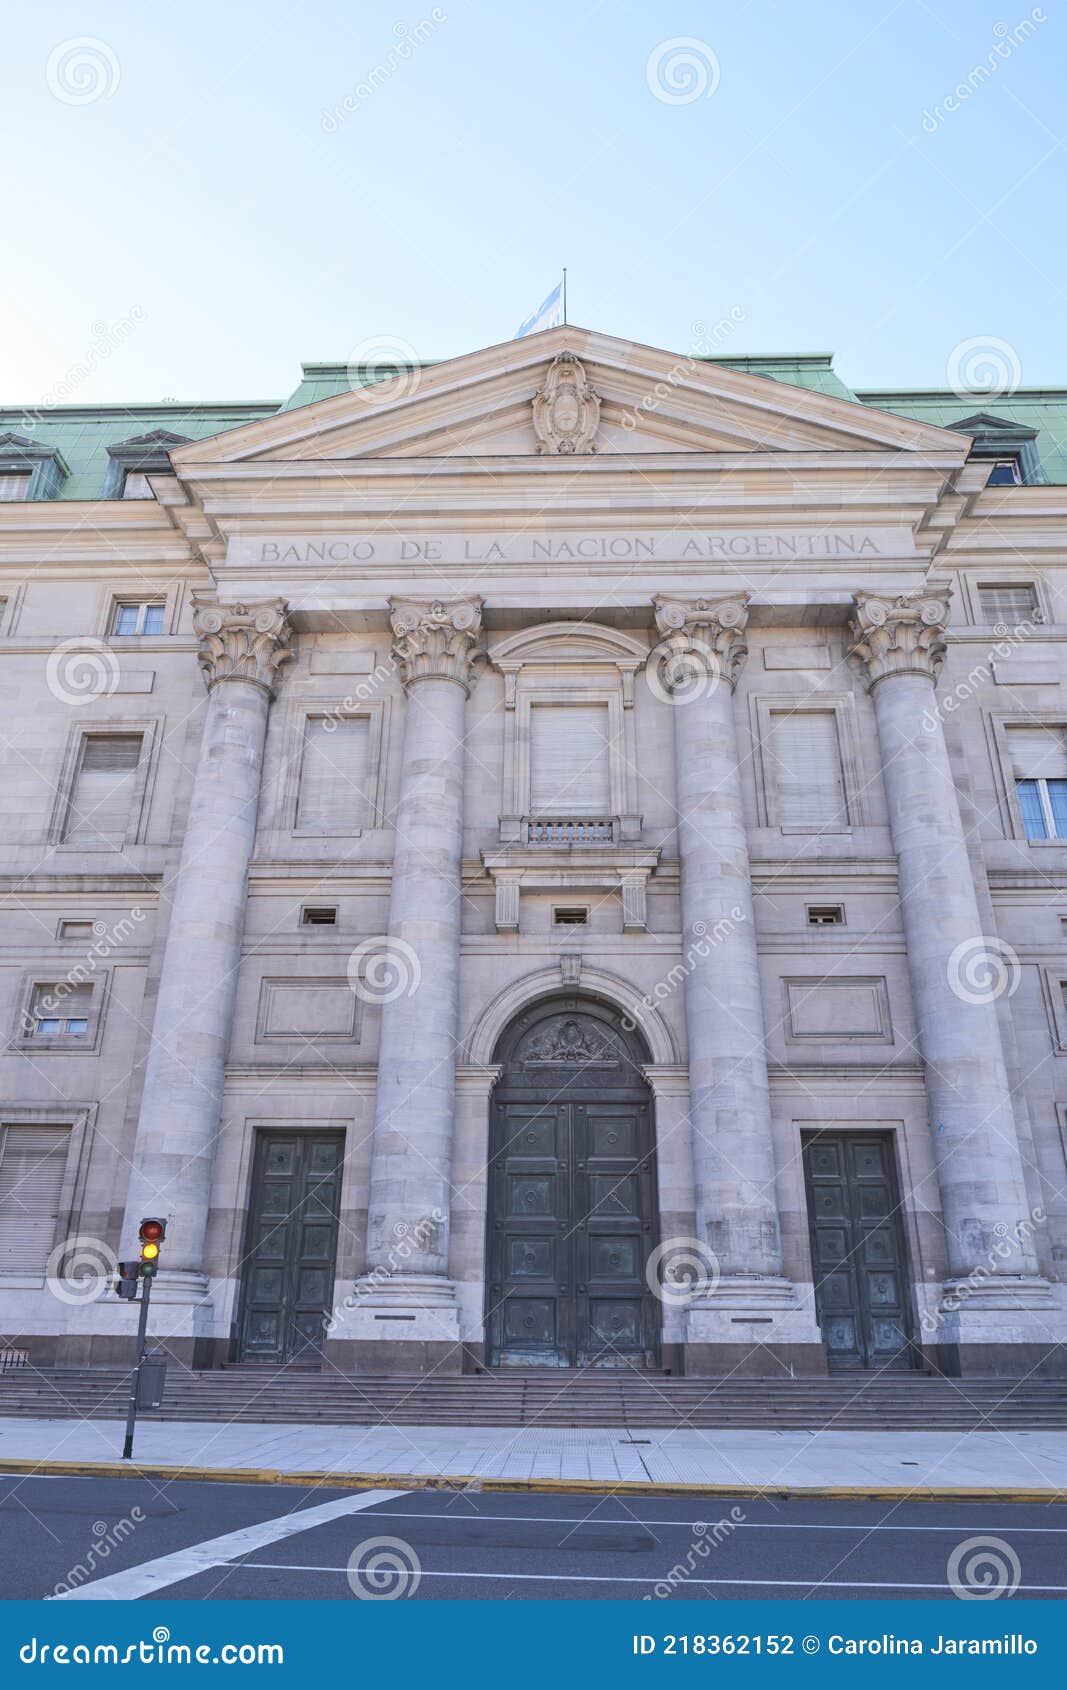 banco de la nacion argentina, argentine nation bank, historical patrimony